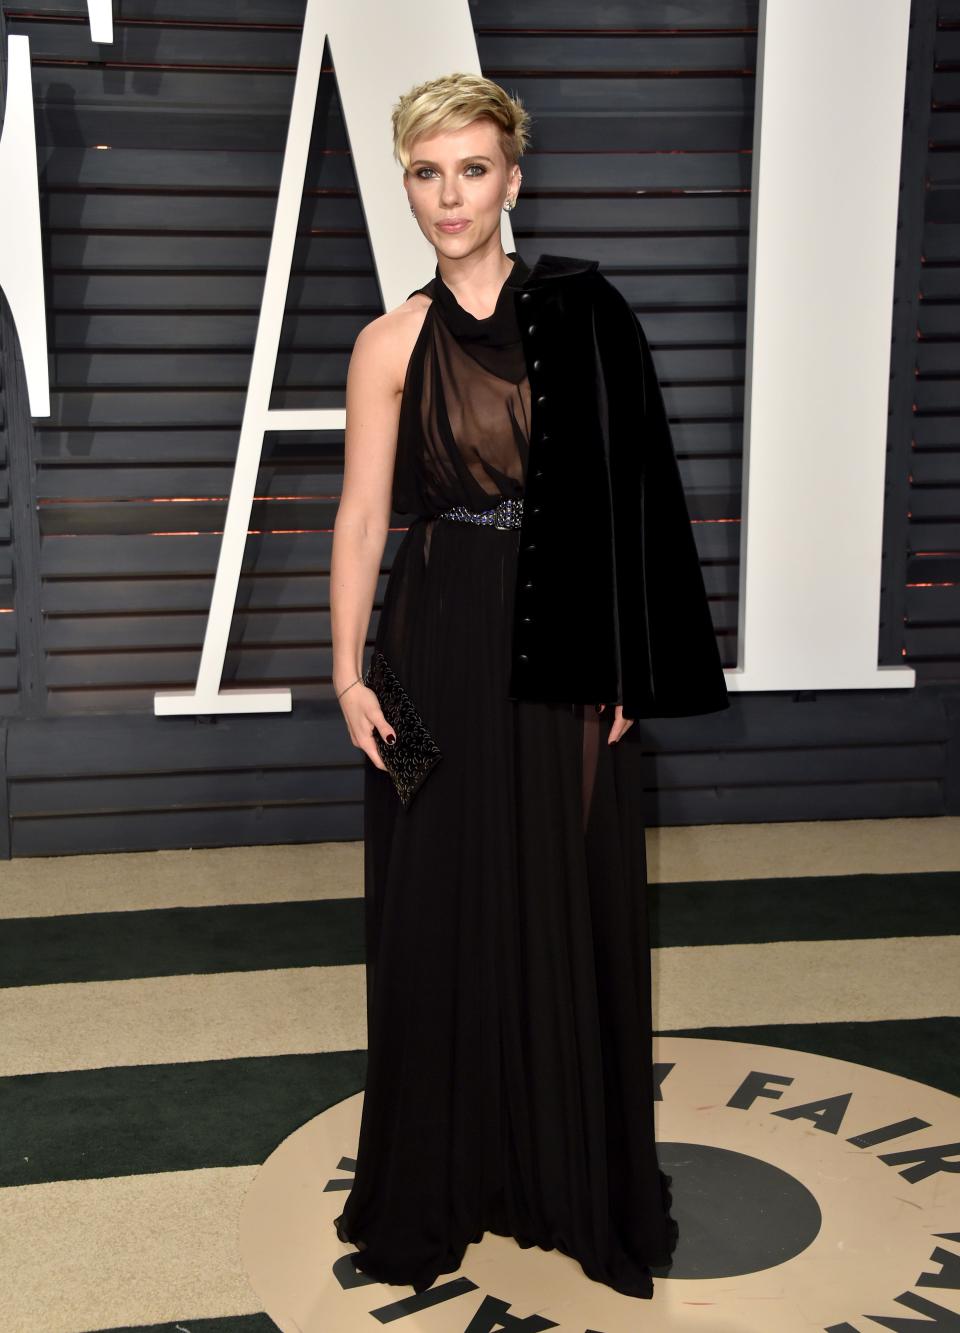 Scarlett Johansson attends the 2017 Vanity Fair Oscar Party